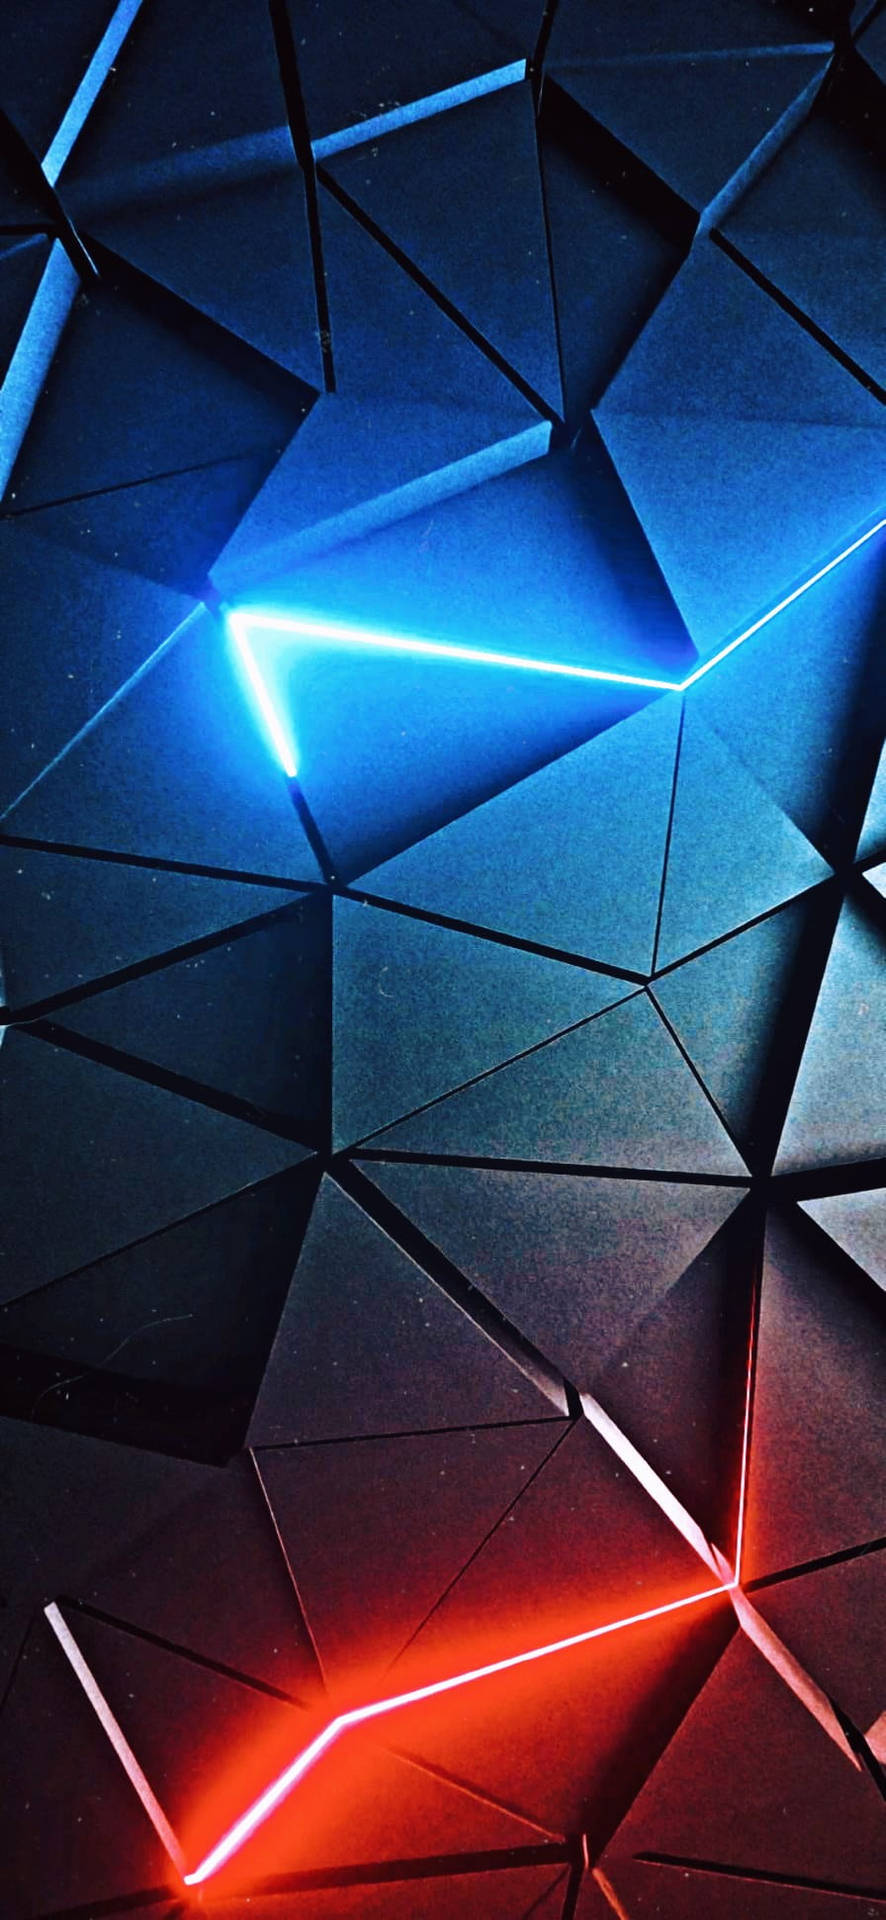 Triangular Abstract Neon Aesthetic Iphone